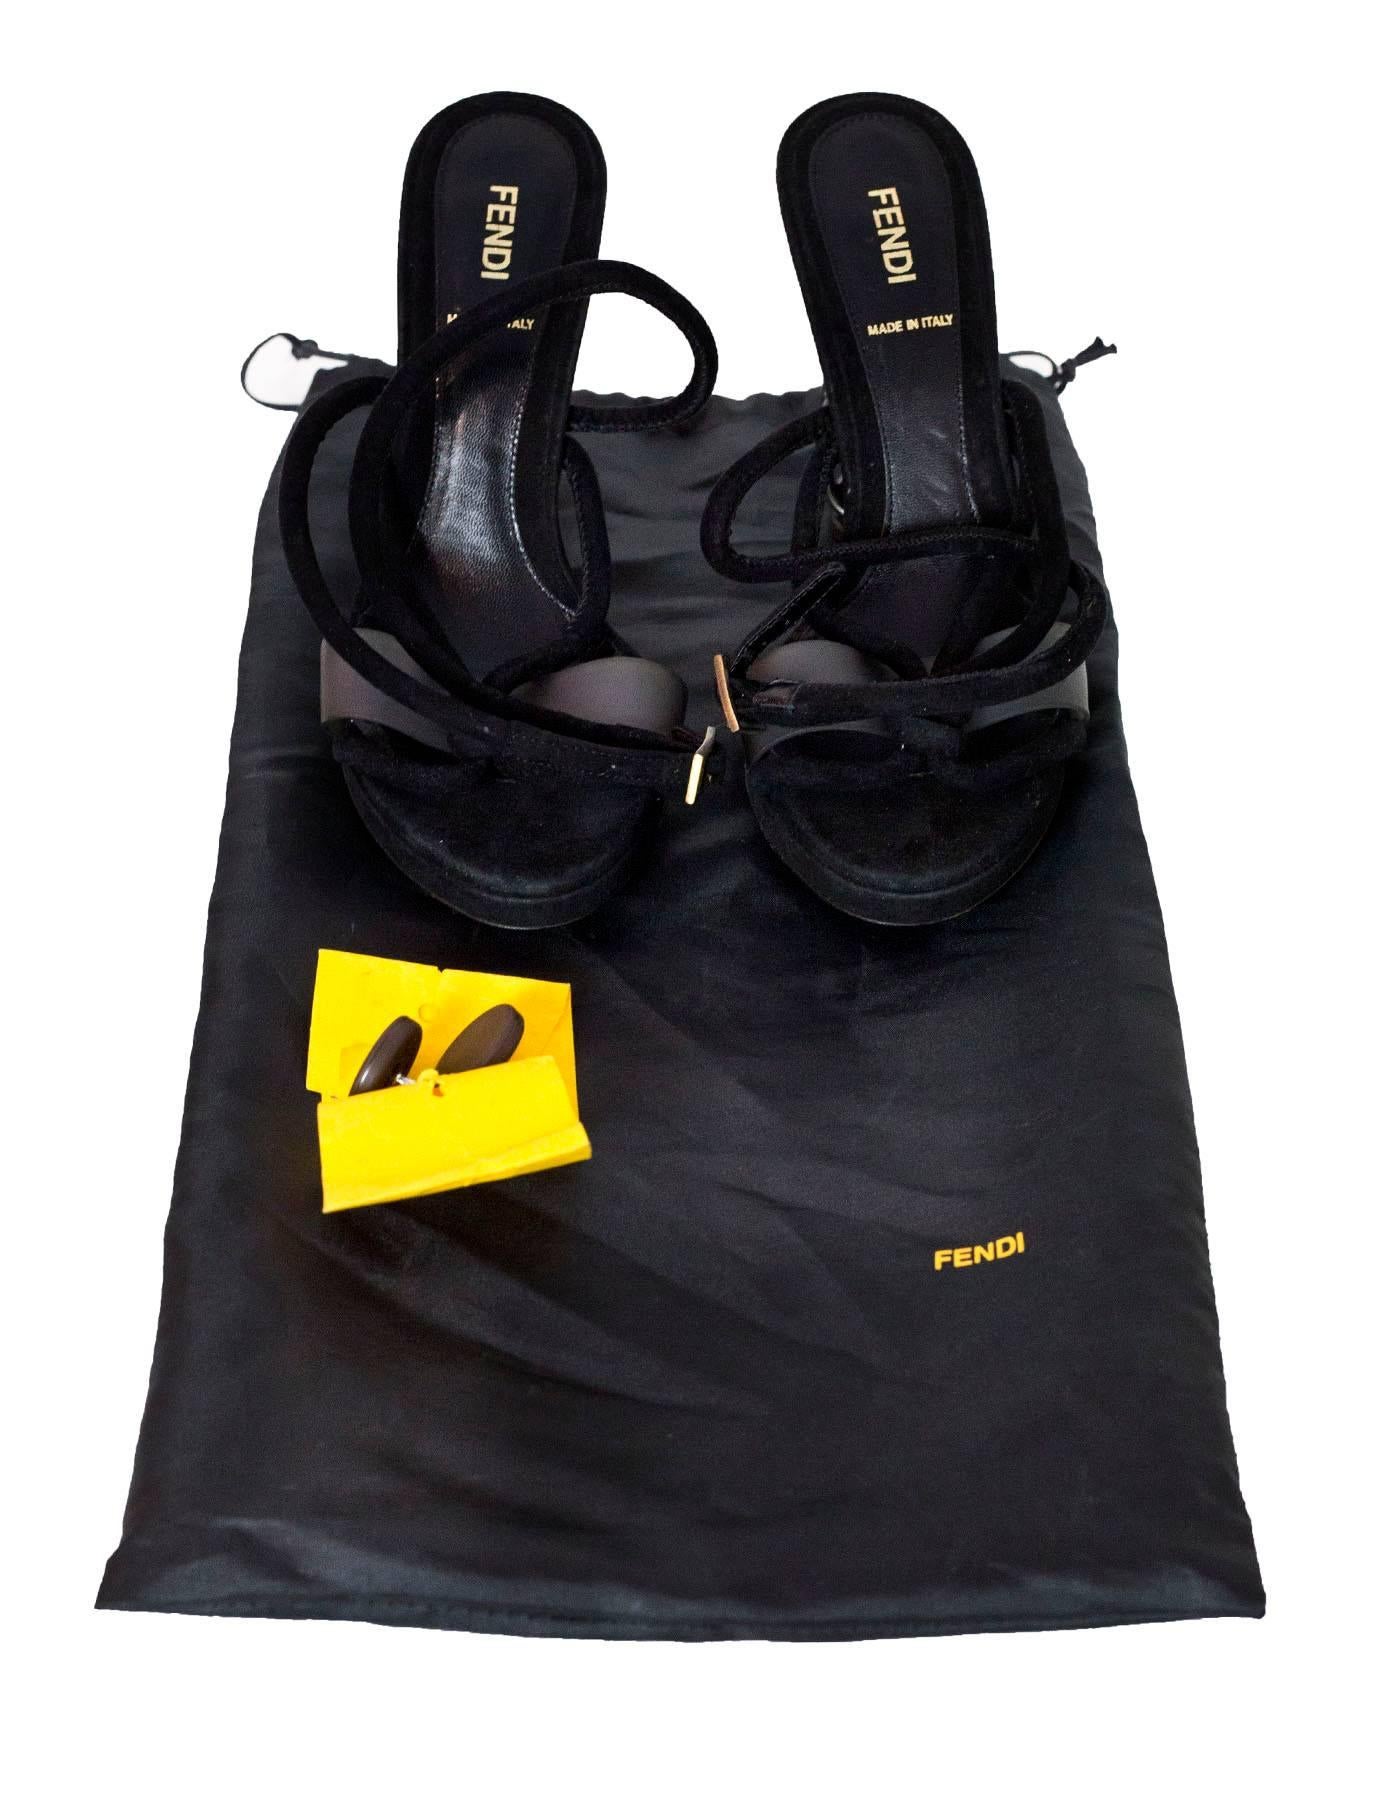 Fendi Black Suede Sandals with Caged Heels Sz 38 1